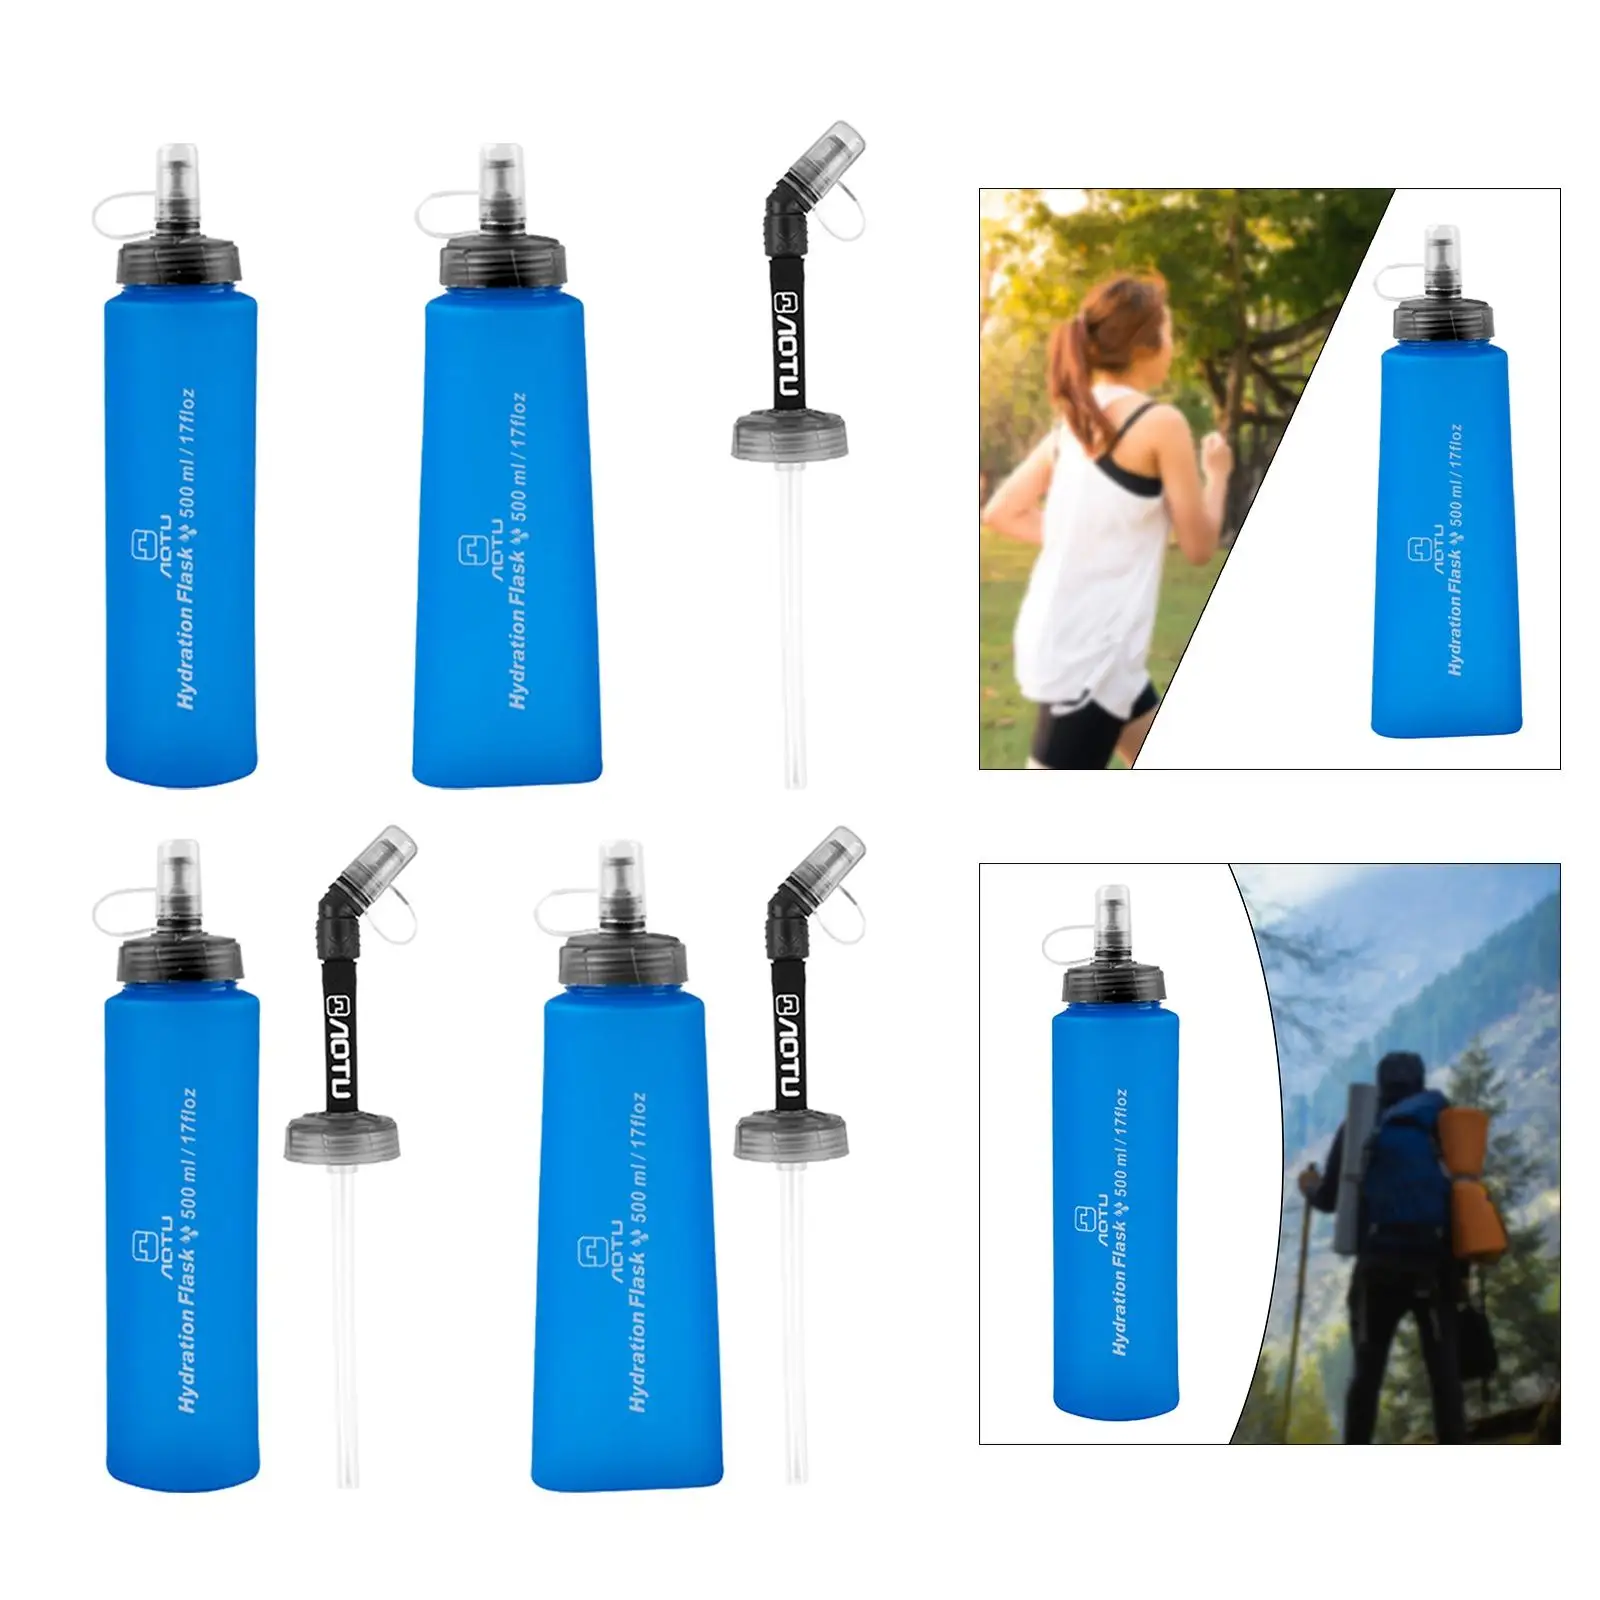 500ml Bladder Pack, Water Bladder, Reservoir Water Storage Organizer Bag for Bladder Replacement for Backpack Hiking